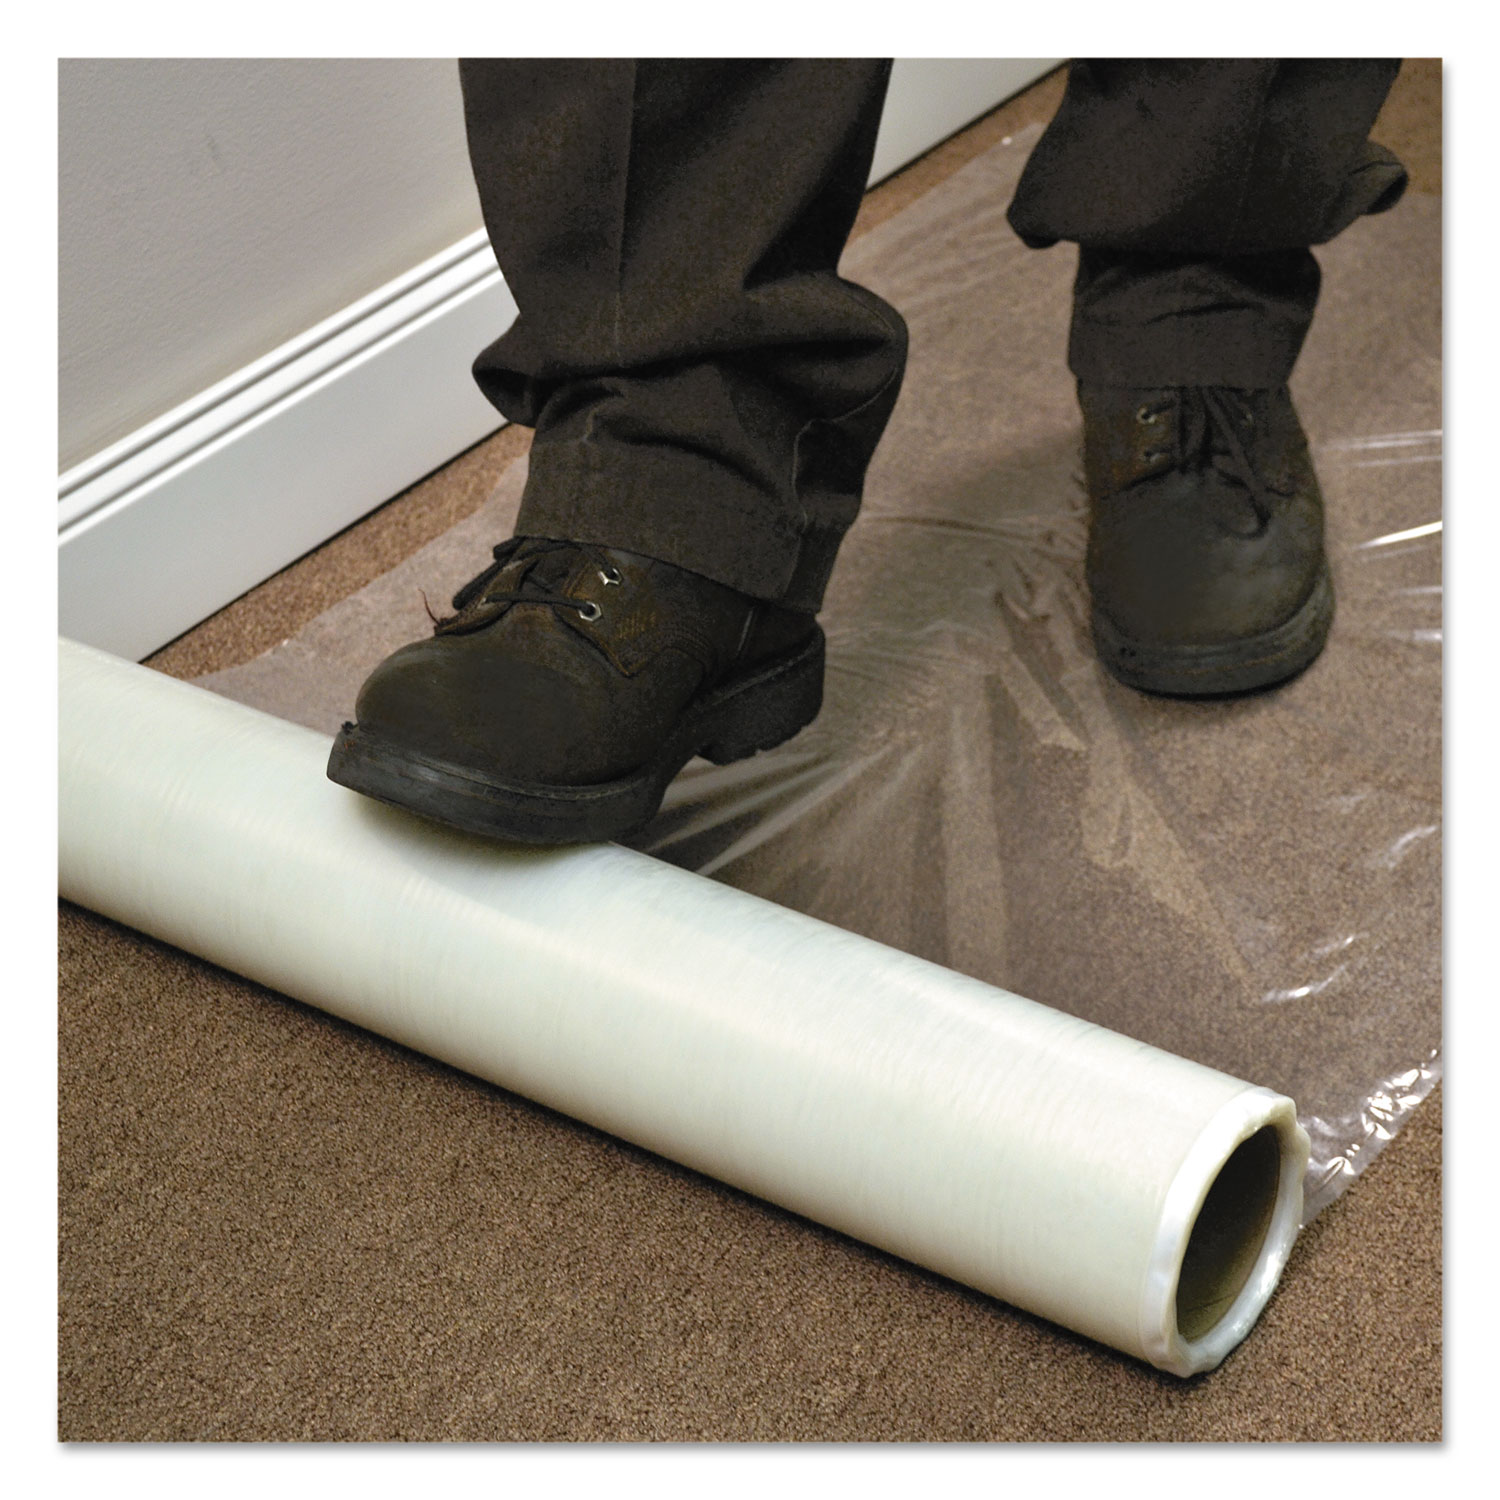  ES Robbins 110024 Roll Guard Temporary Floor Protection Film for Carpet, 36 x 2,400, Clear (ESR110024) 